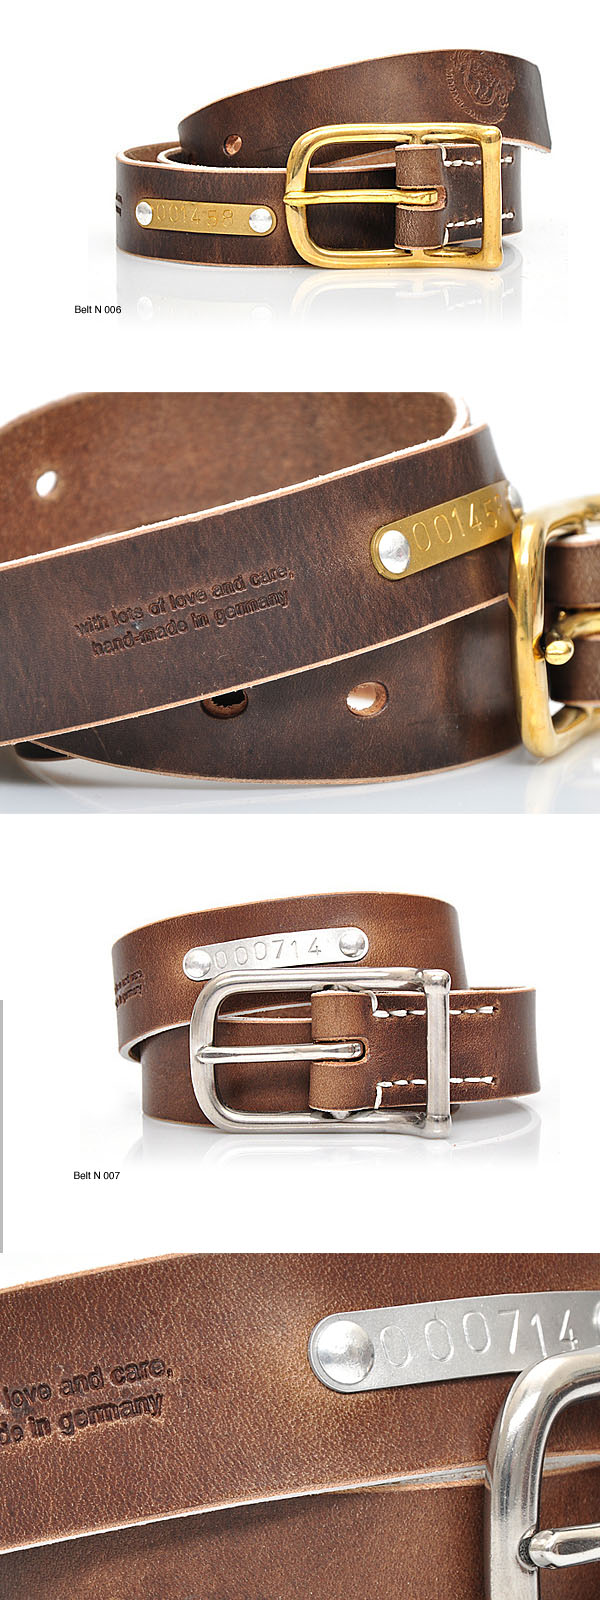 Michael Sans Berlin Leather Belt N 006-007 : surrounding.com